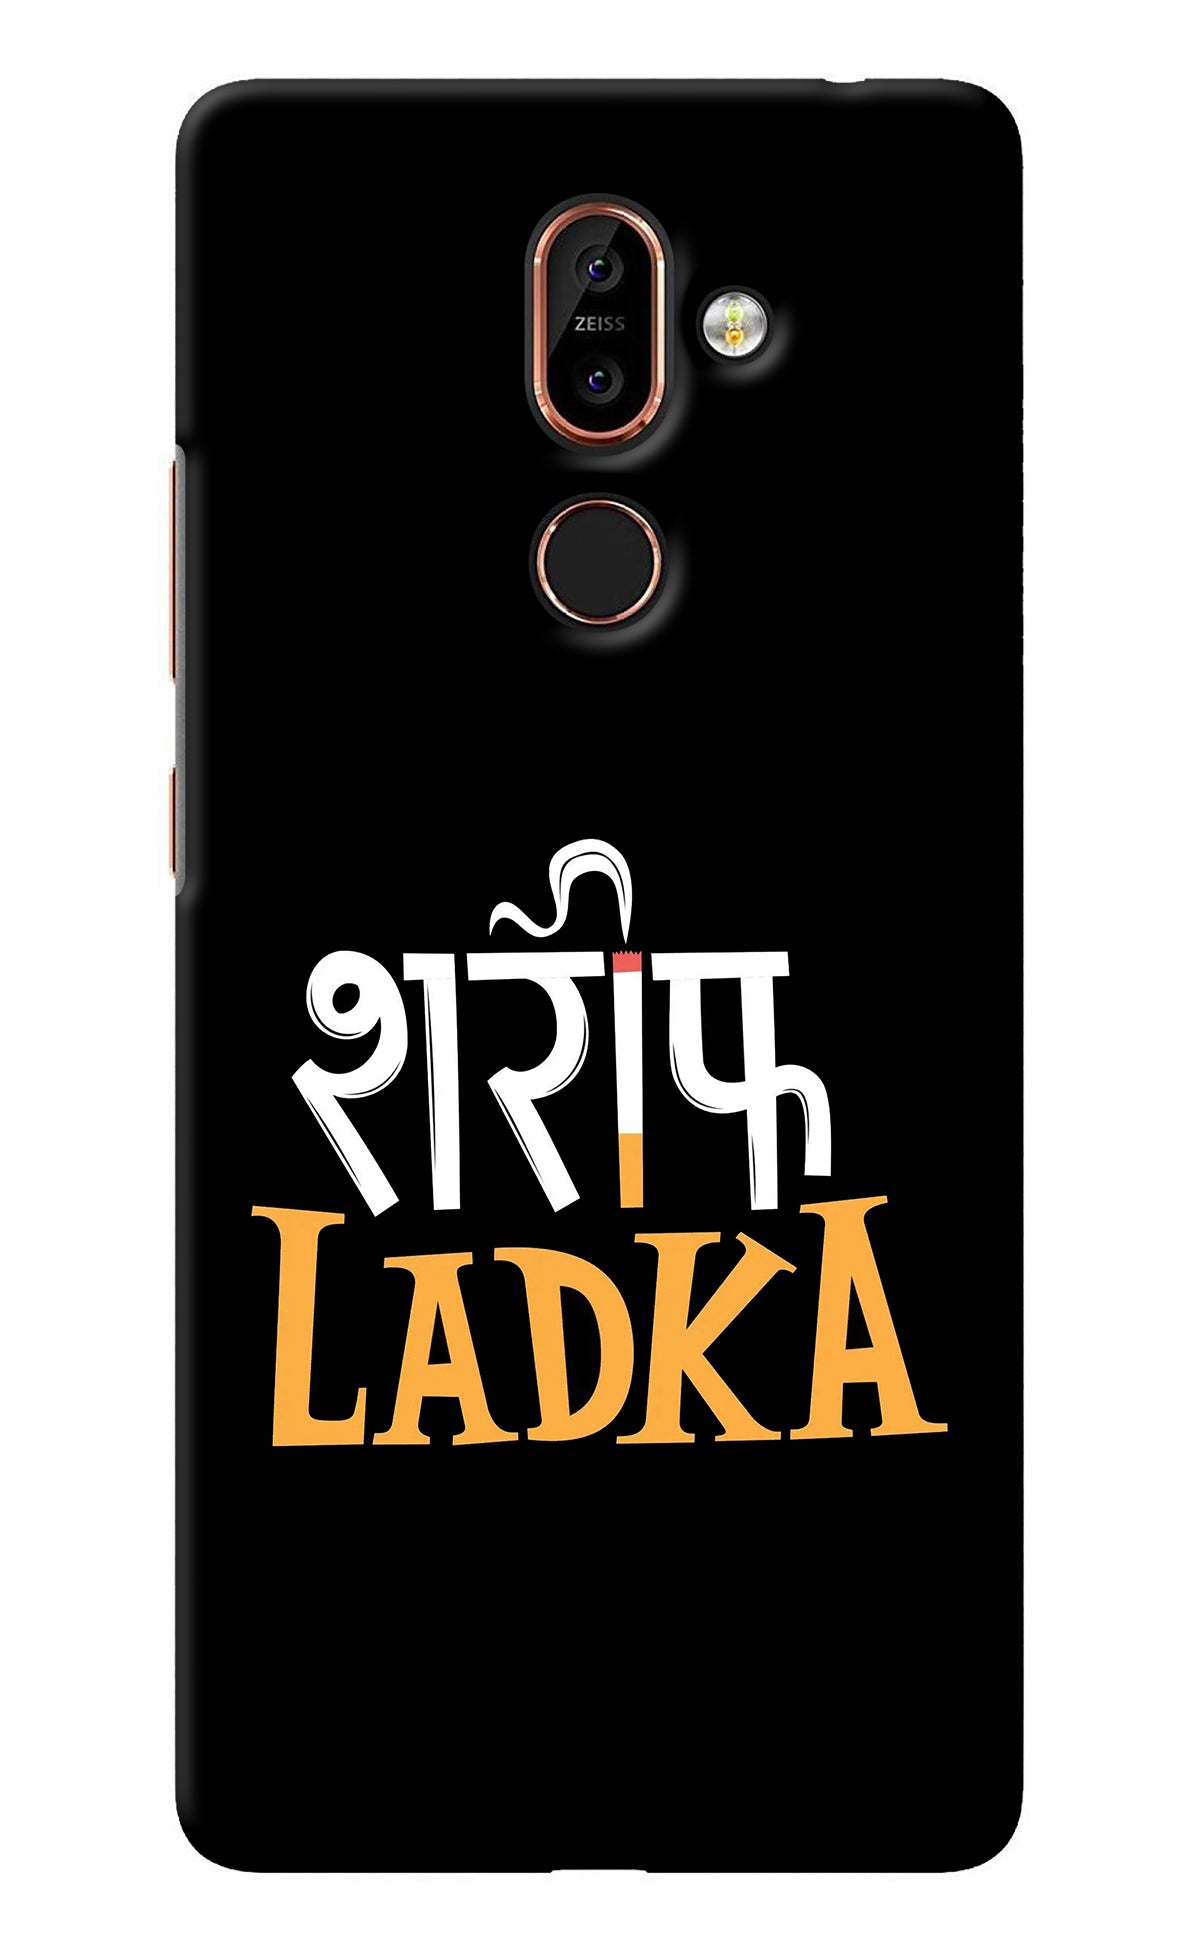 Shareef Ladka Nokia 7 Plus Back Cover